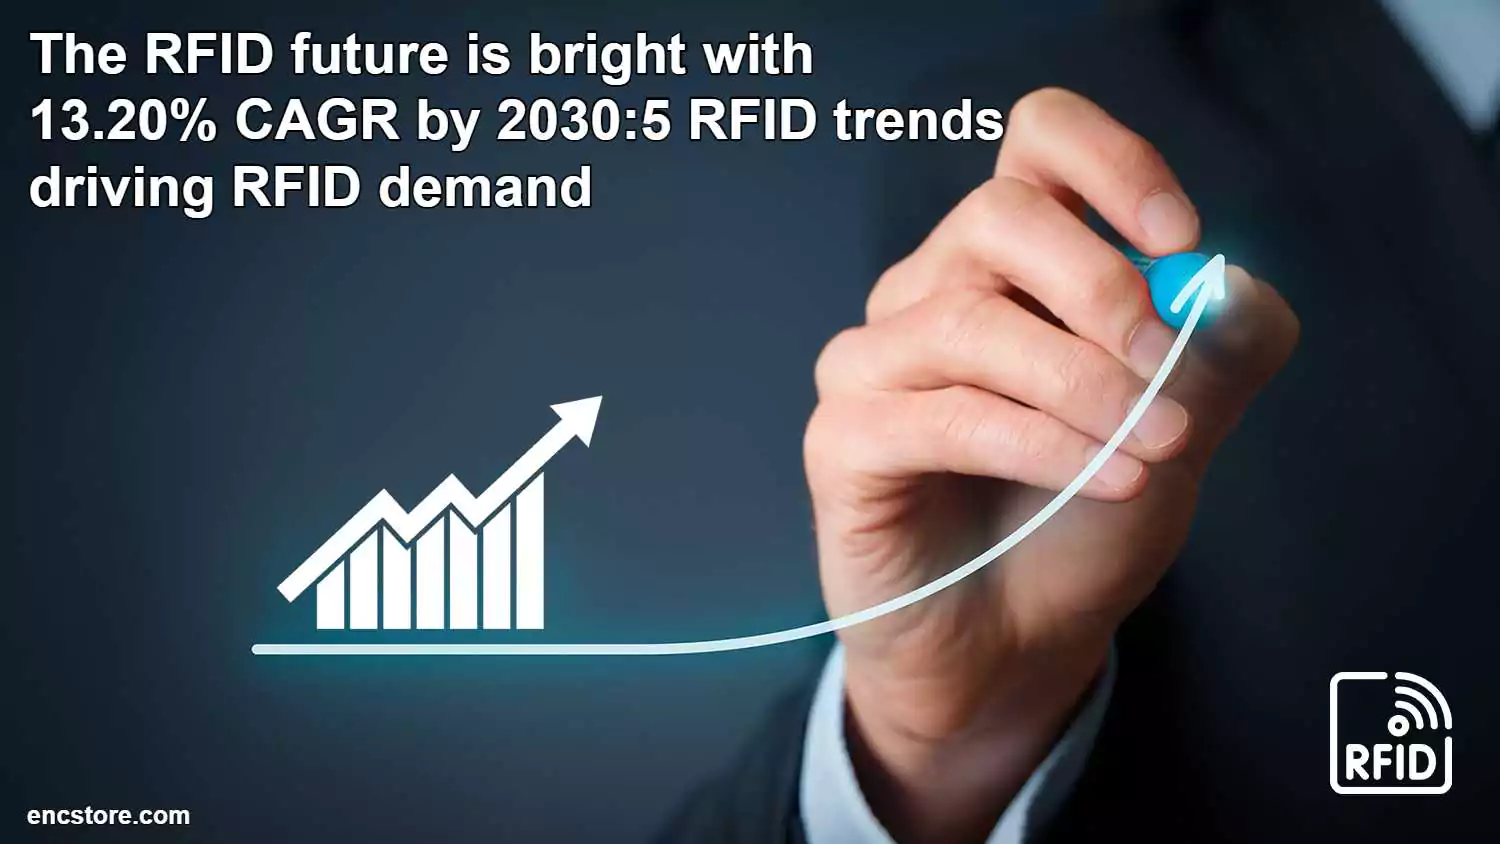 5 RFID trends driving RFID demand